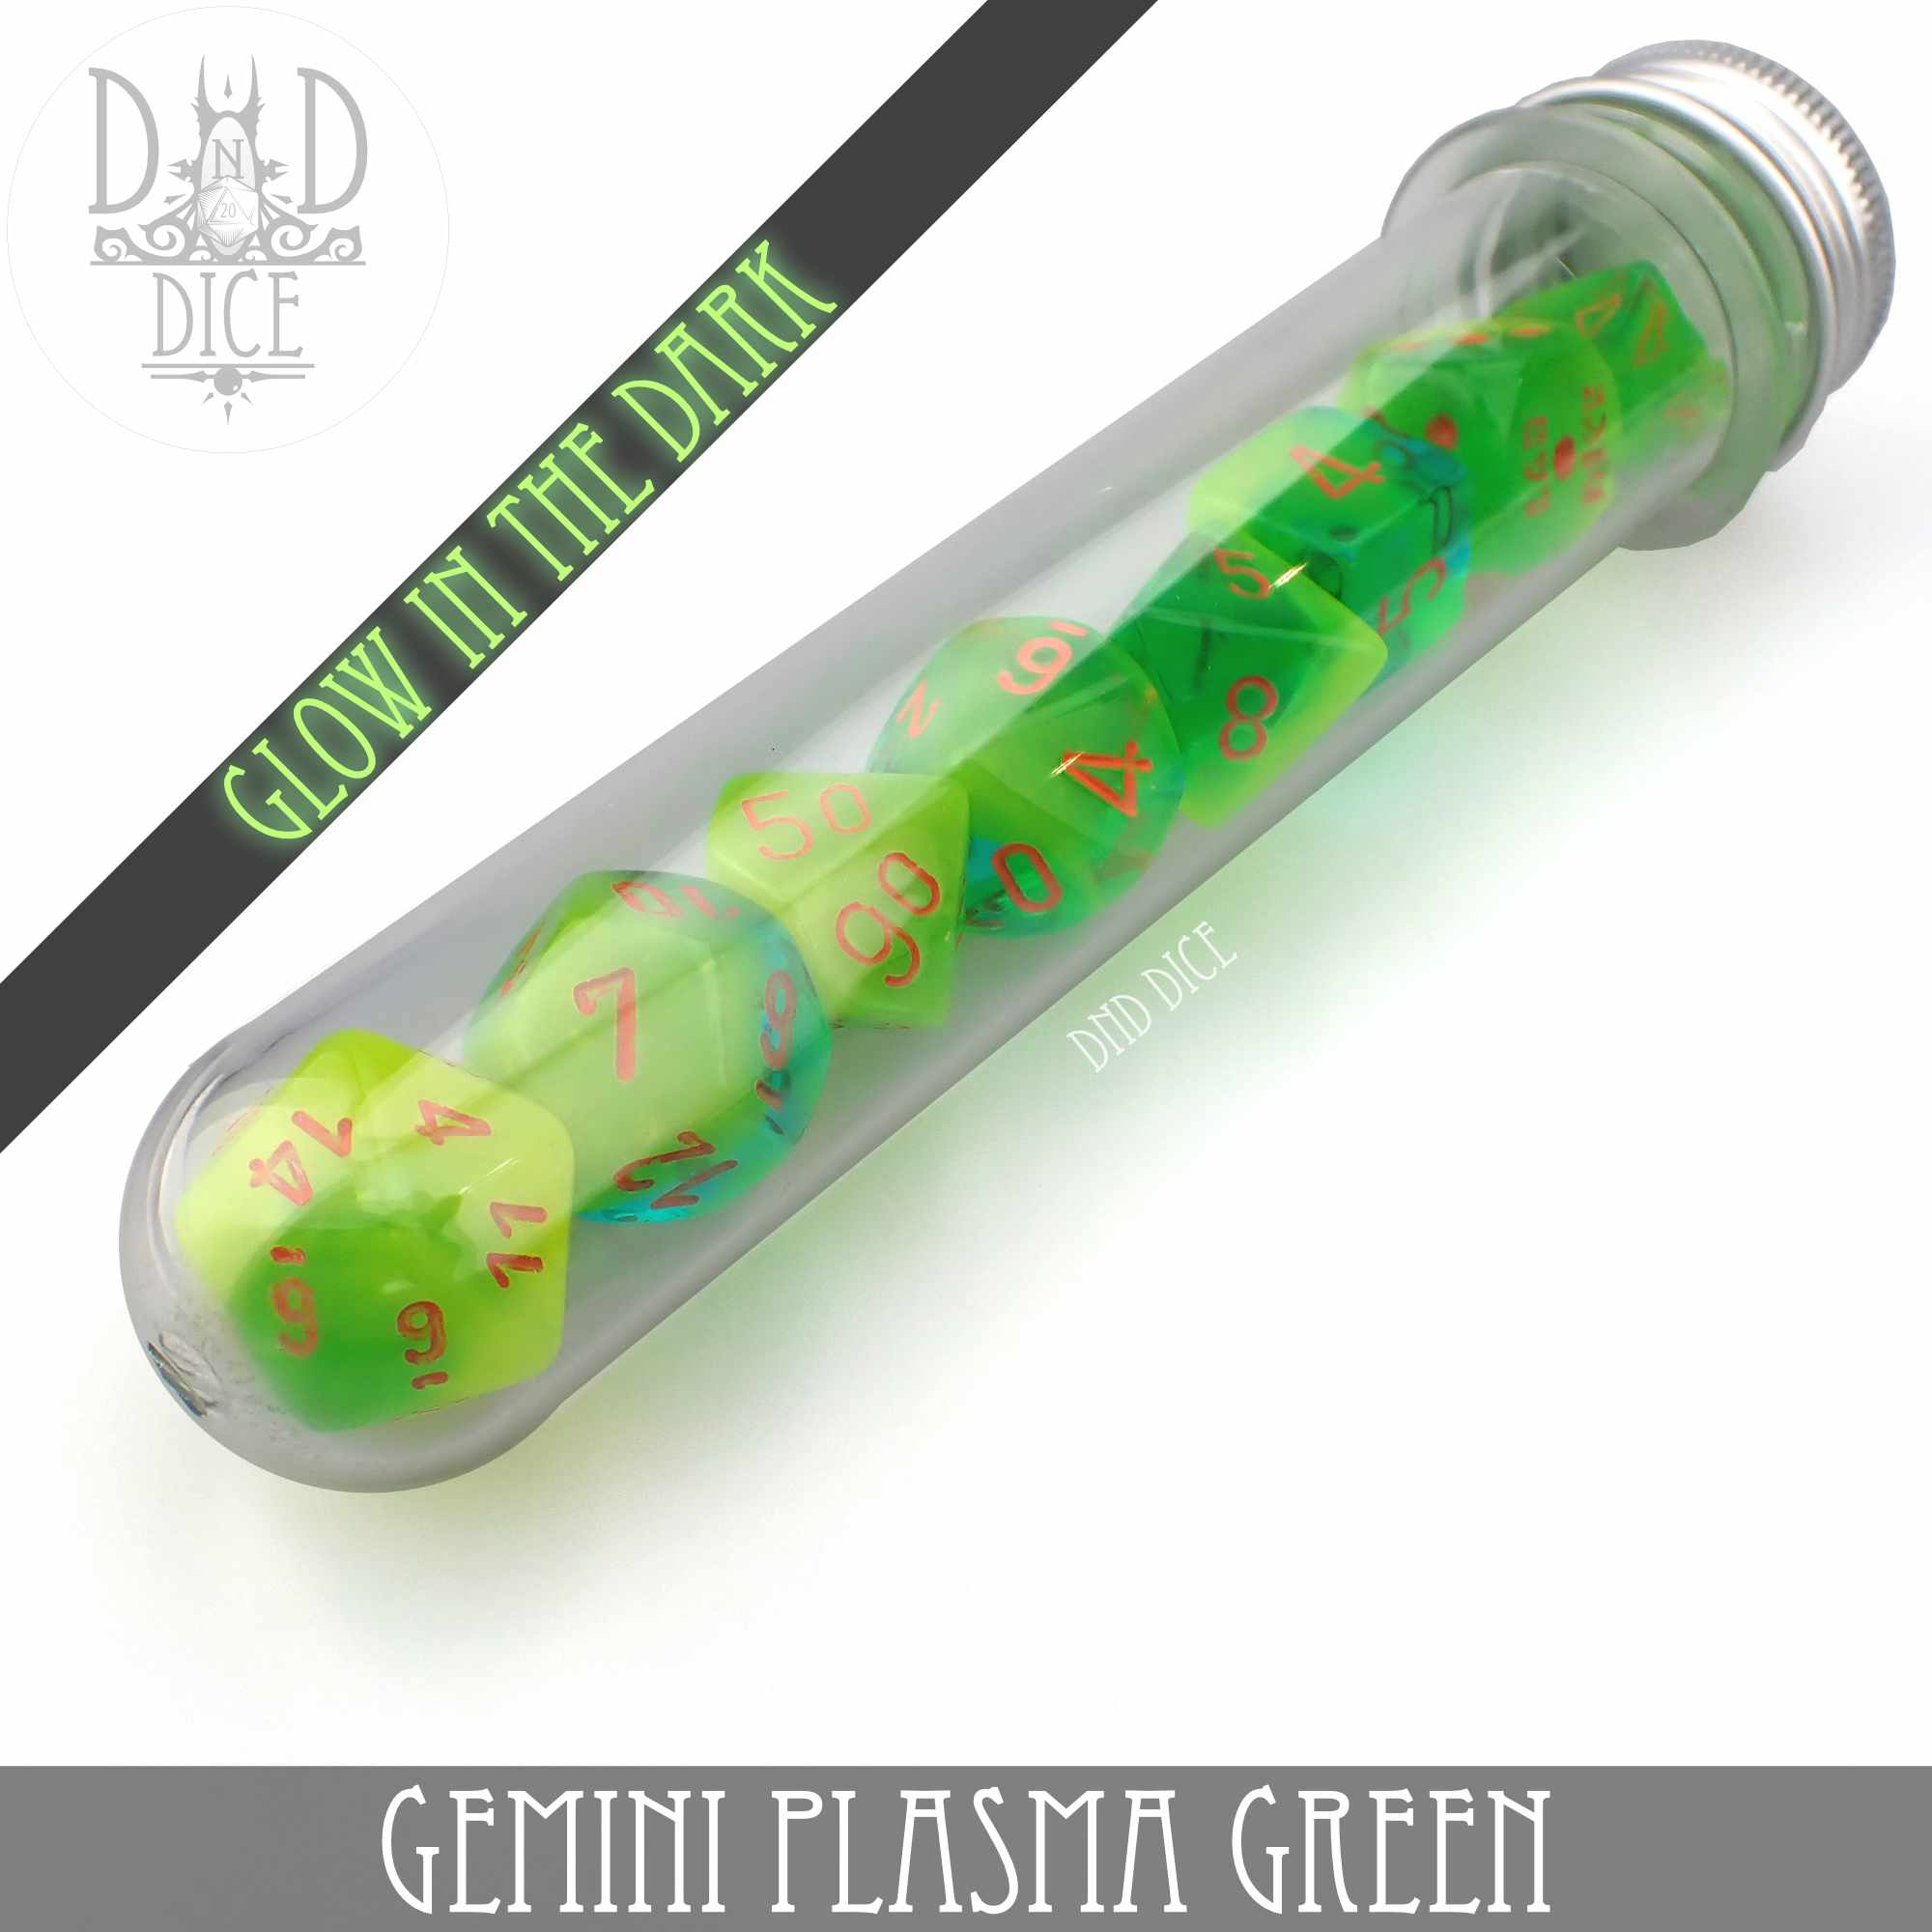 Gemini Plasma Green Lab 5 (Glow)